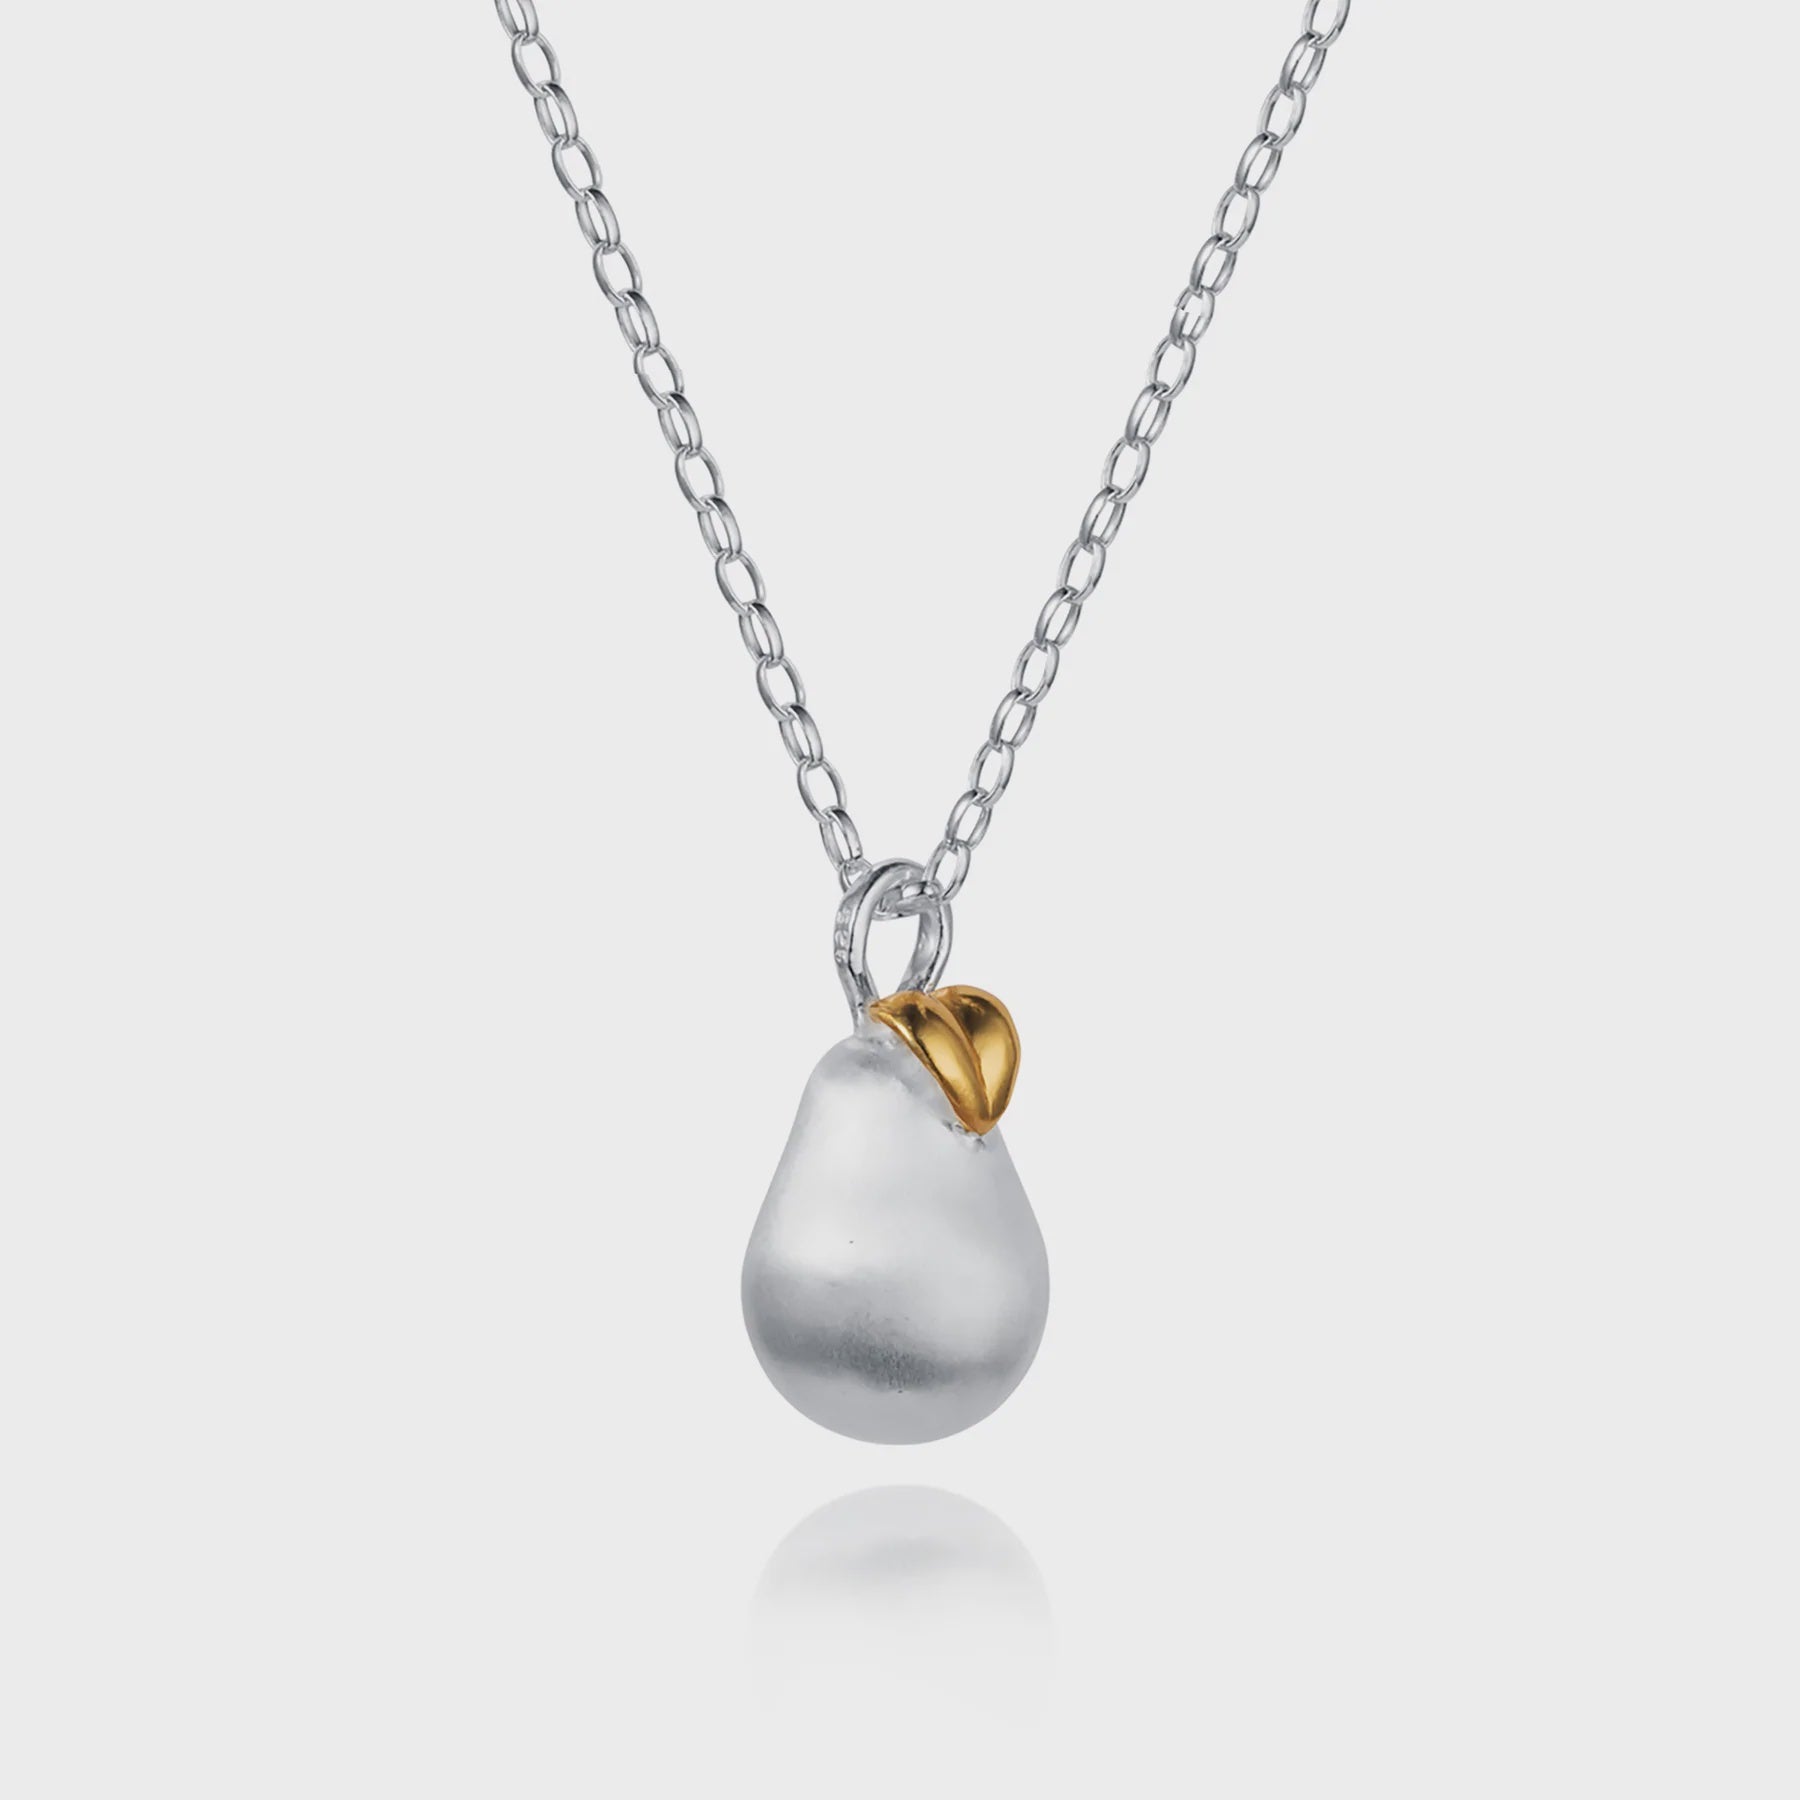 Rare Pear Silver & Gold Necklace